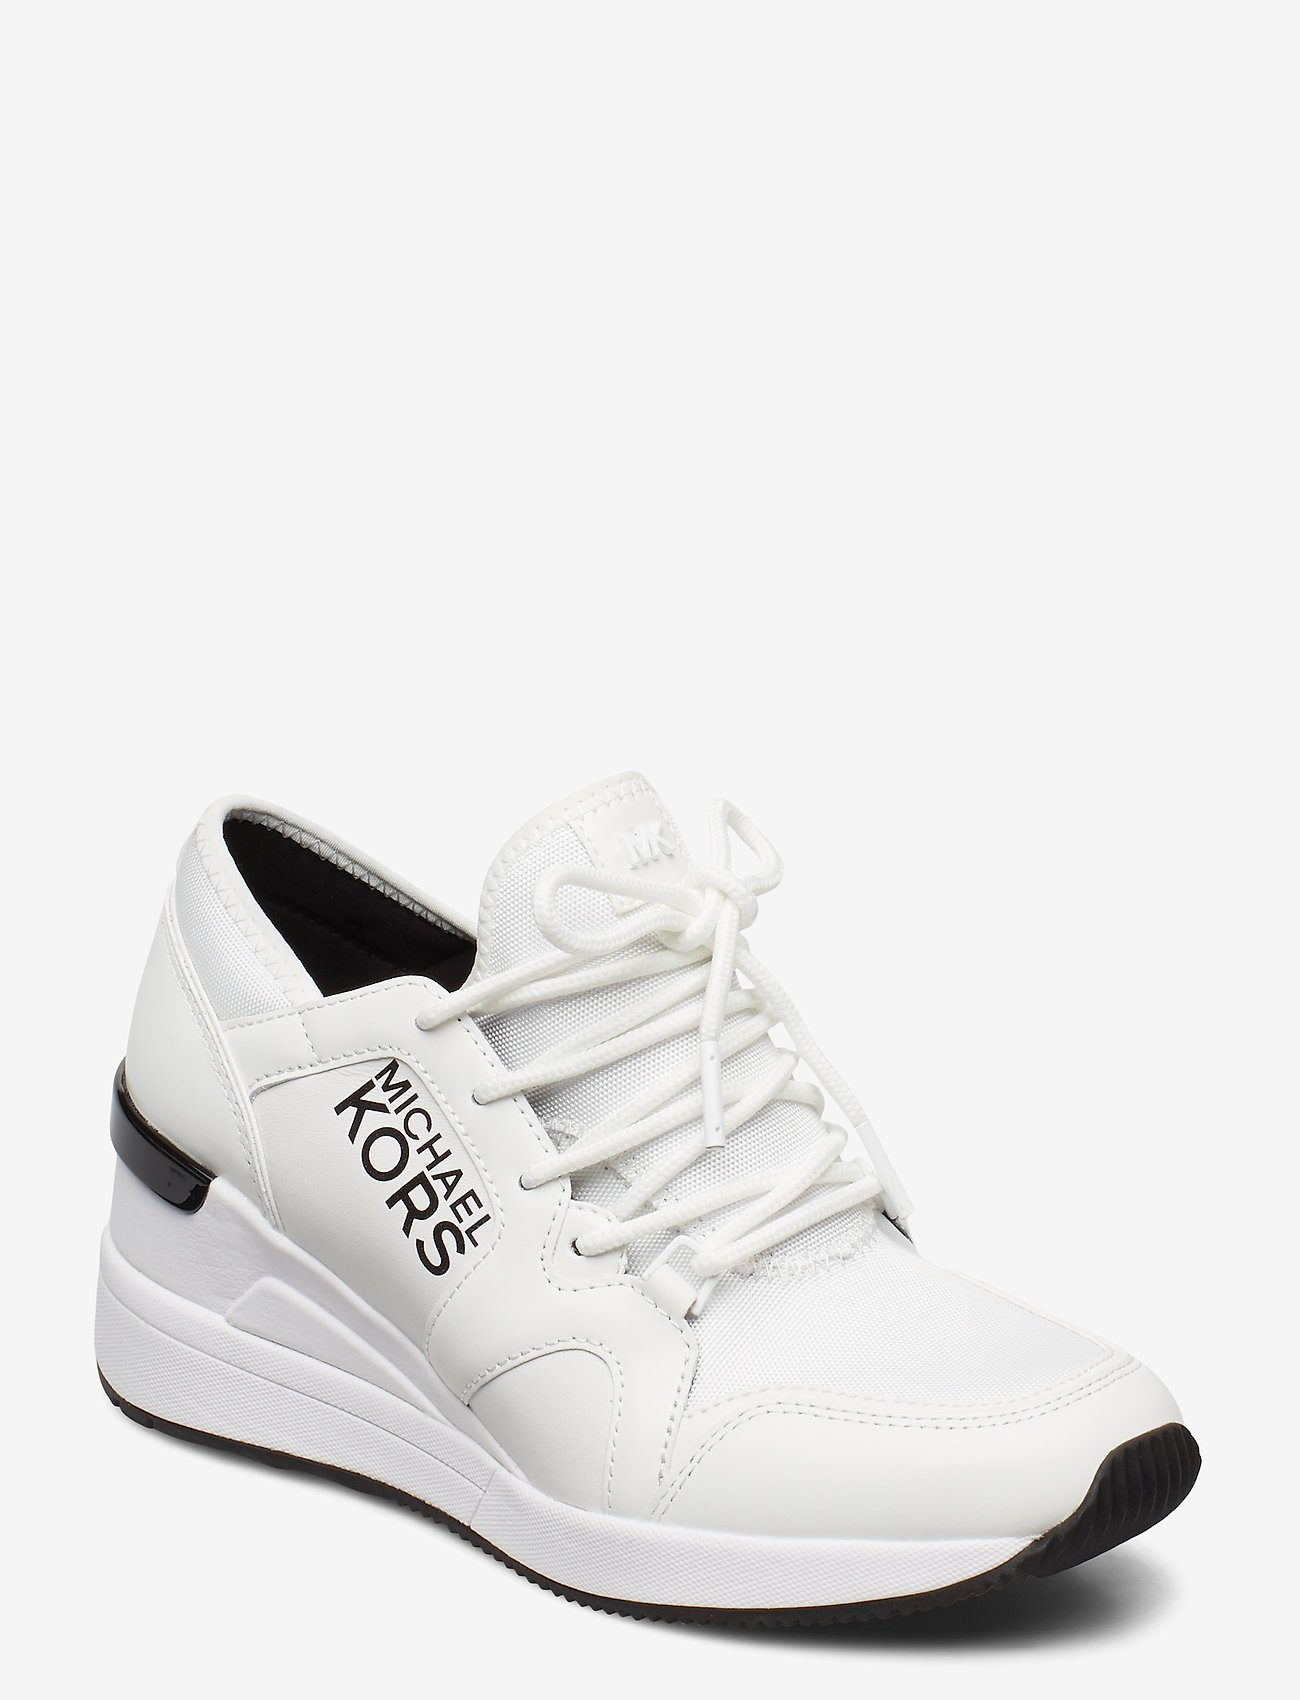 white michael kors shoes